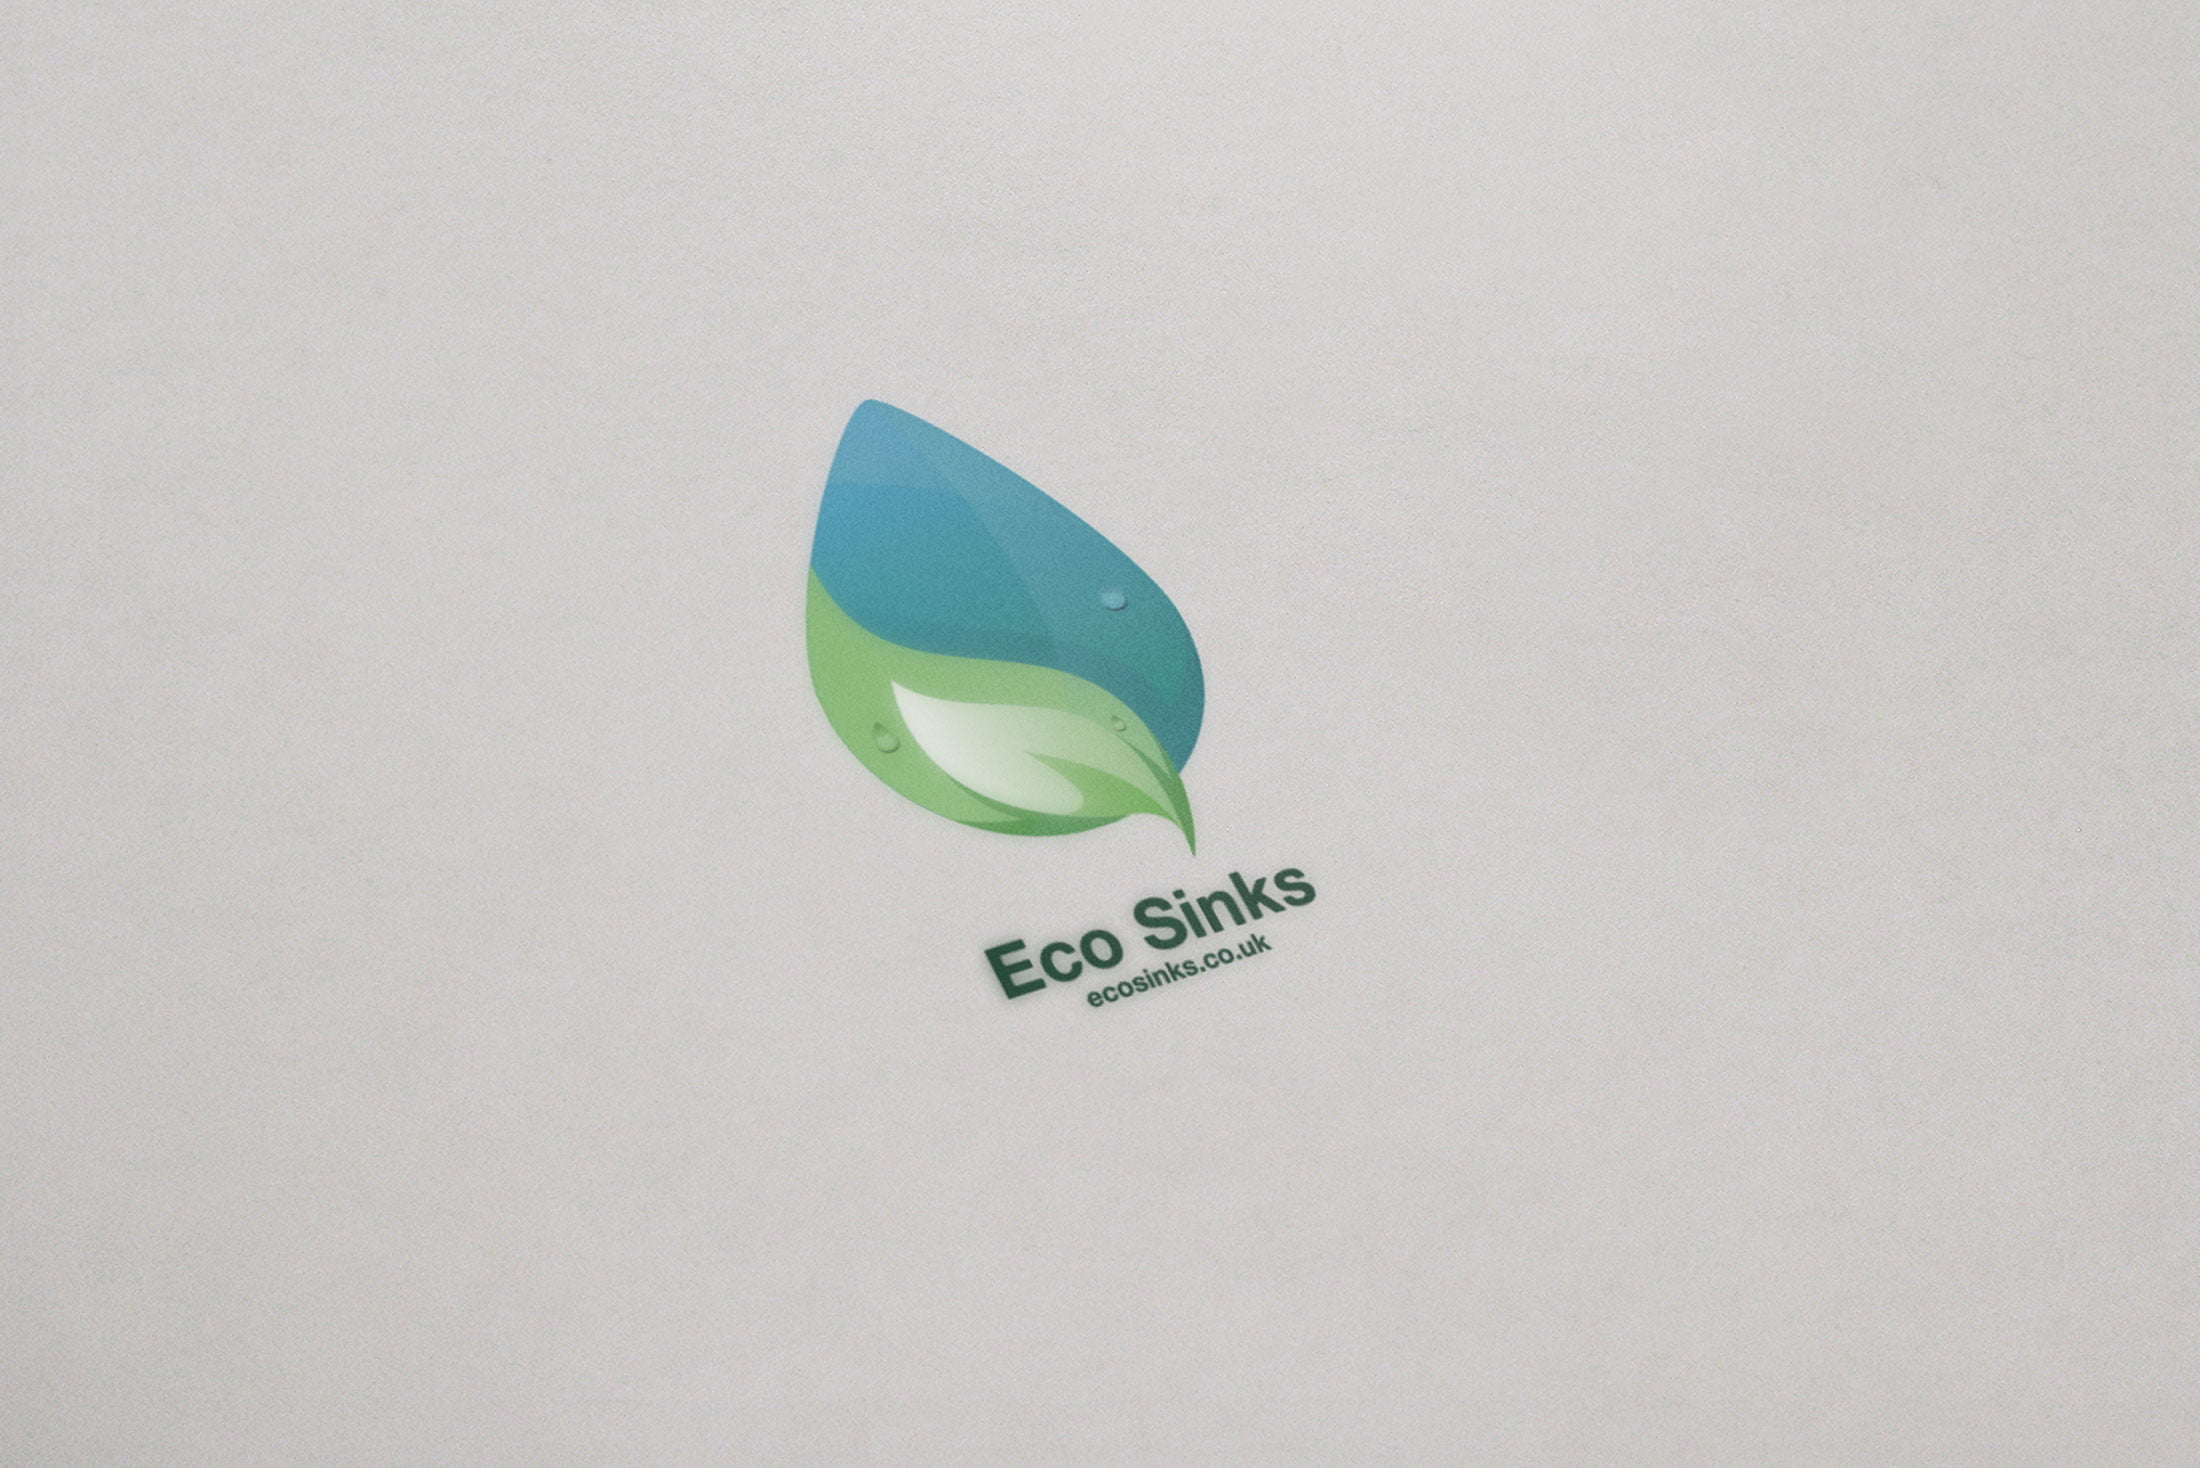 dizajn logotipa ecosinks designer2 dizajn web stranica dizajn logotipa 2